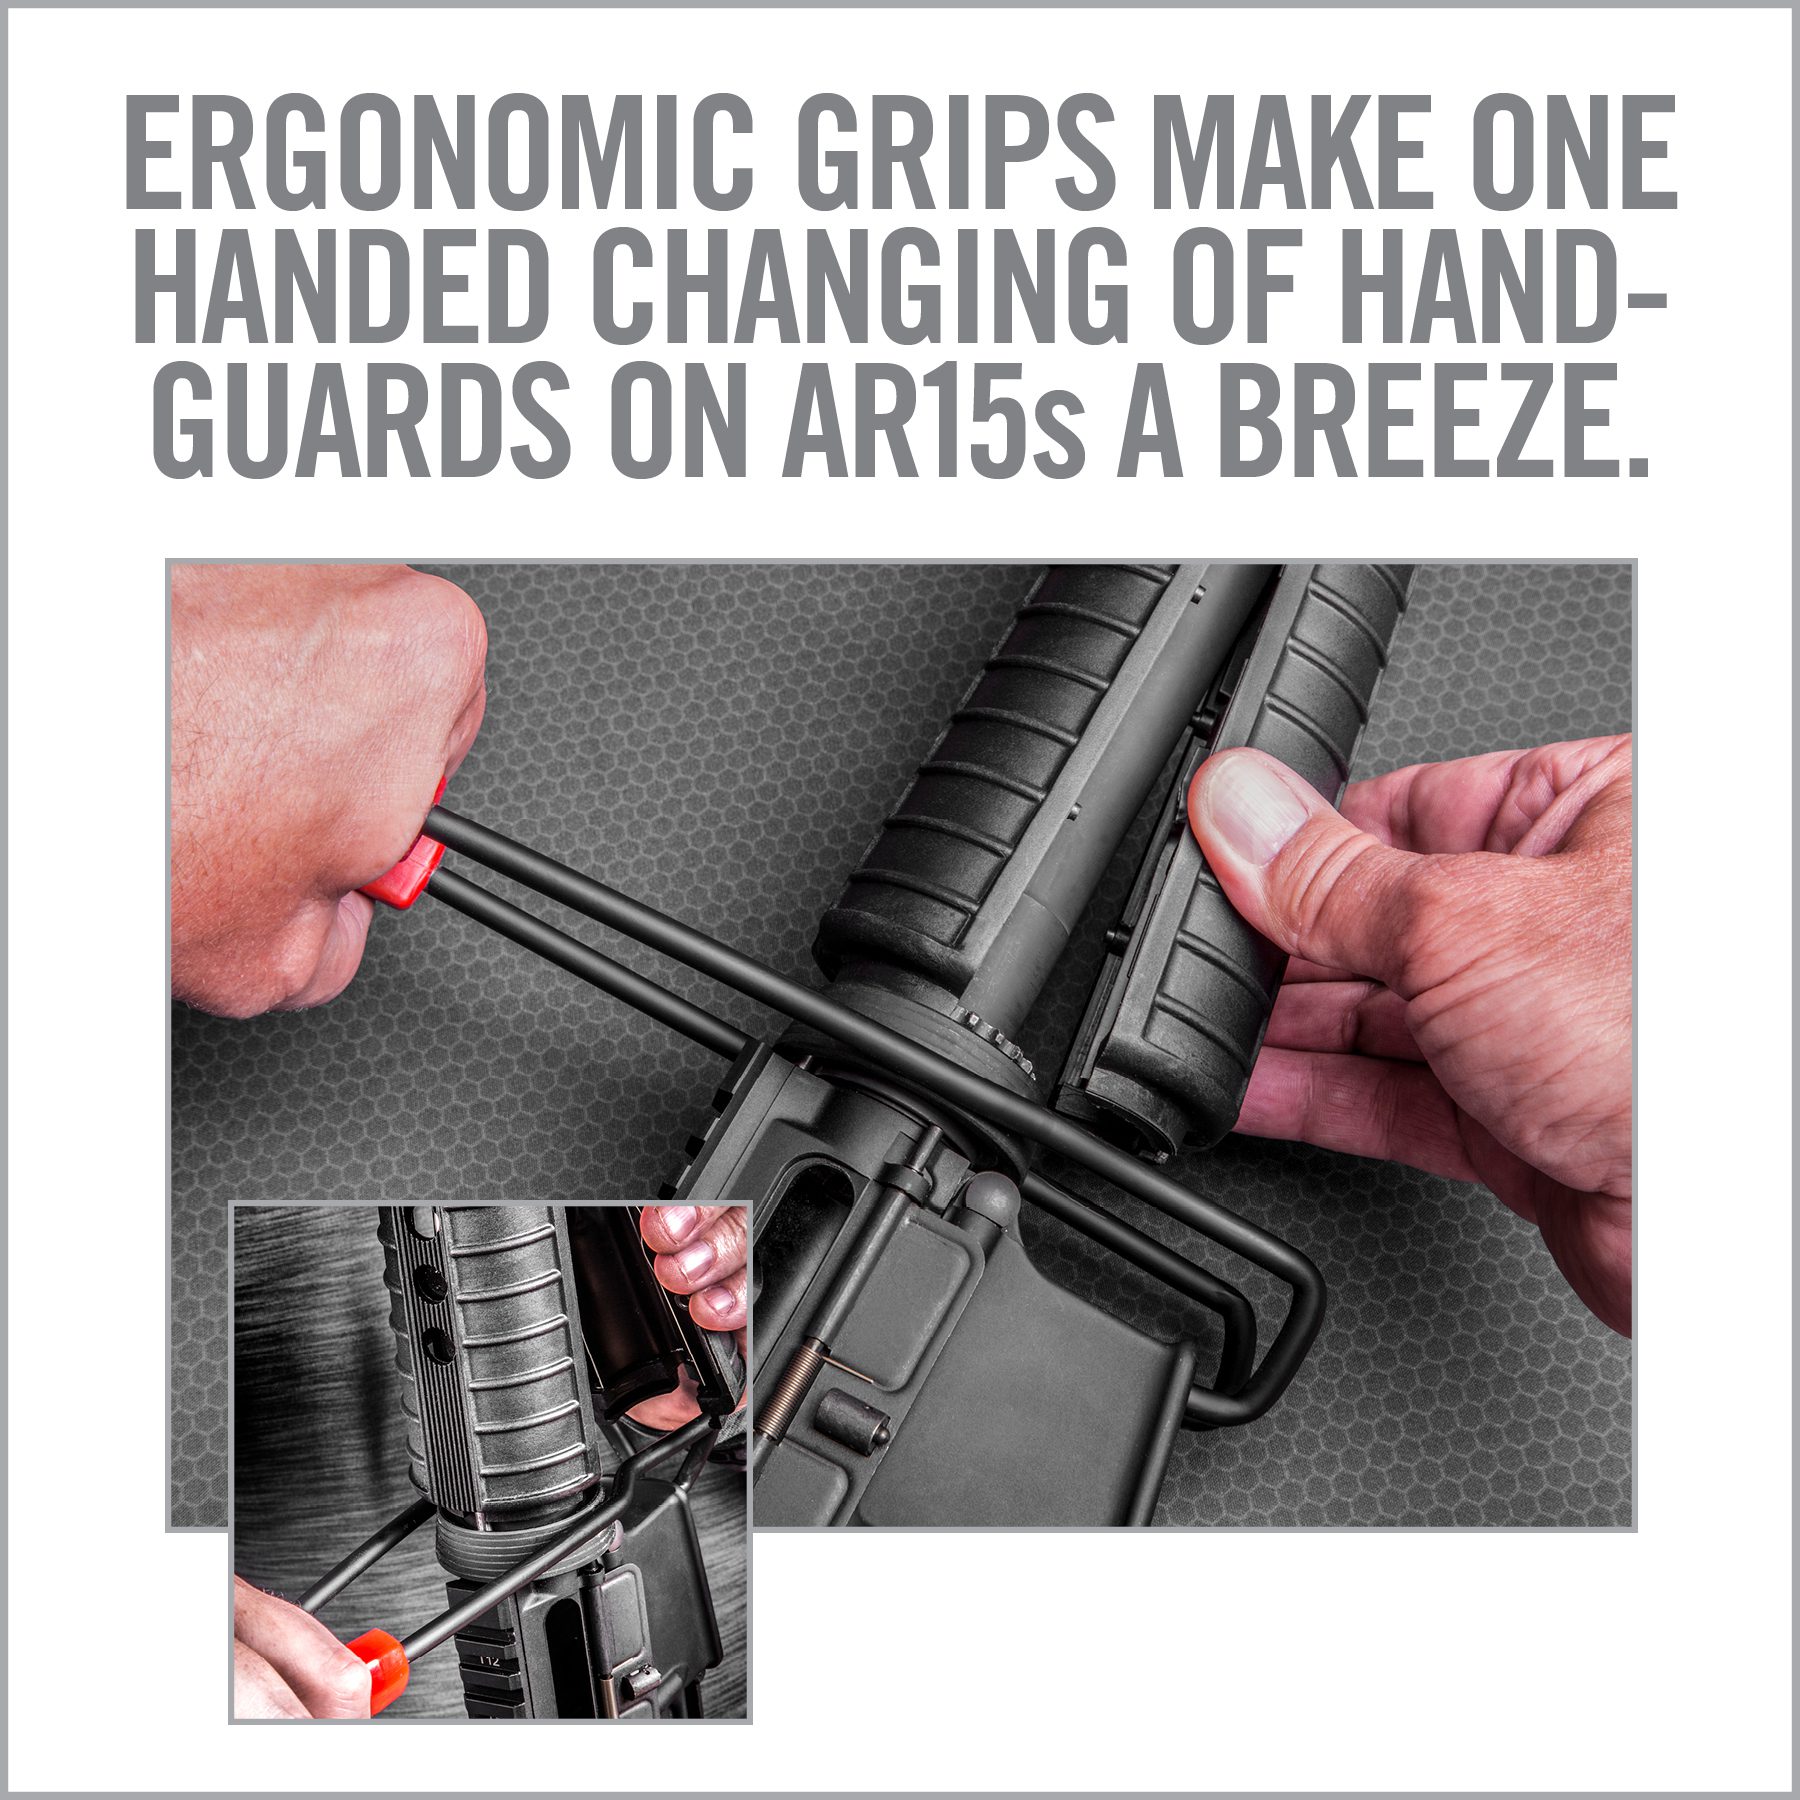 Easy-Grip